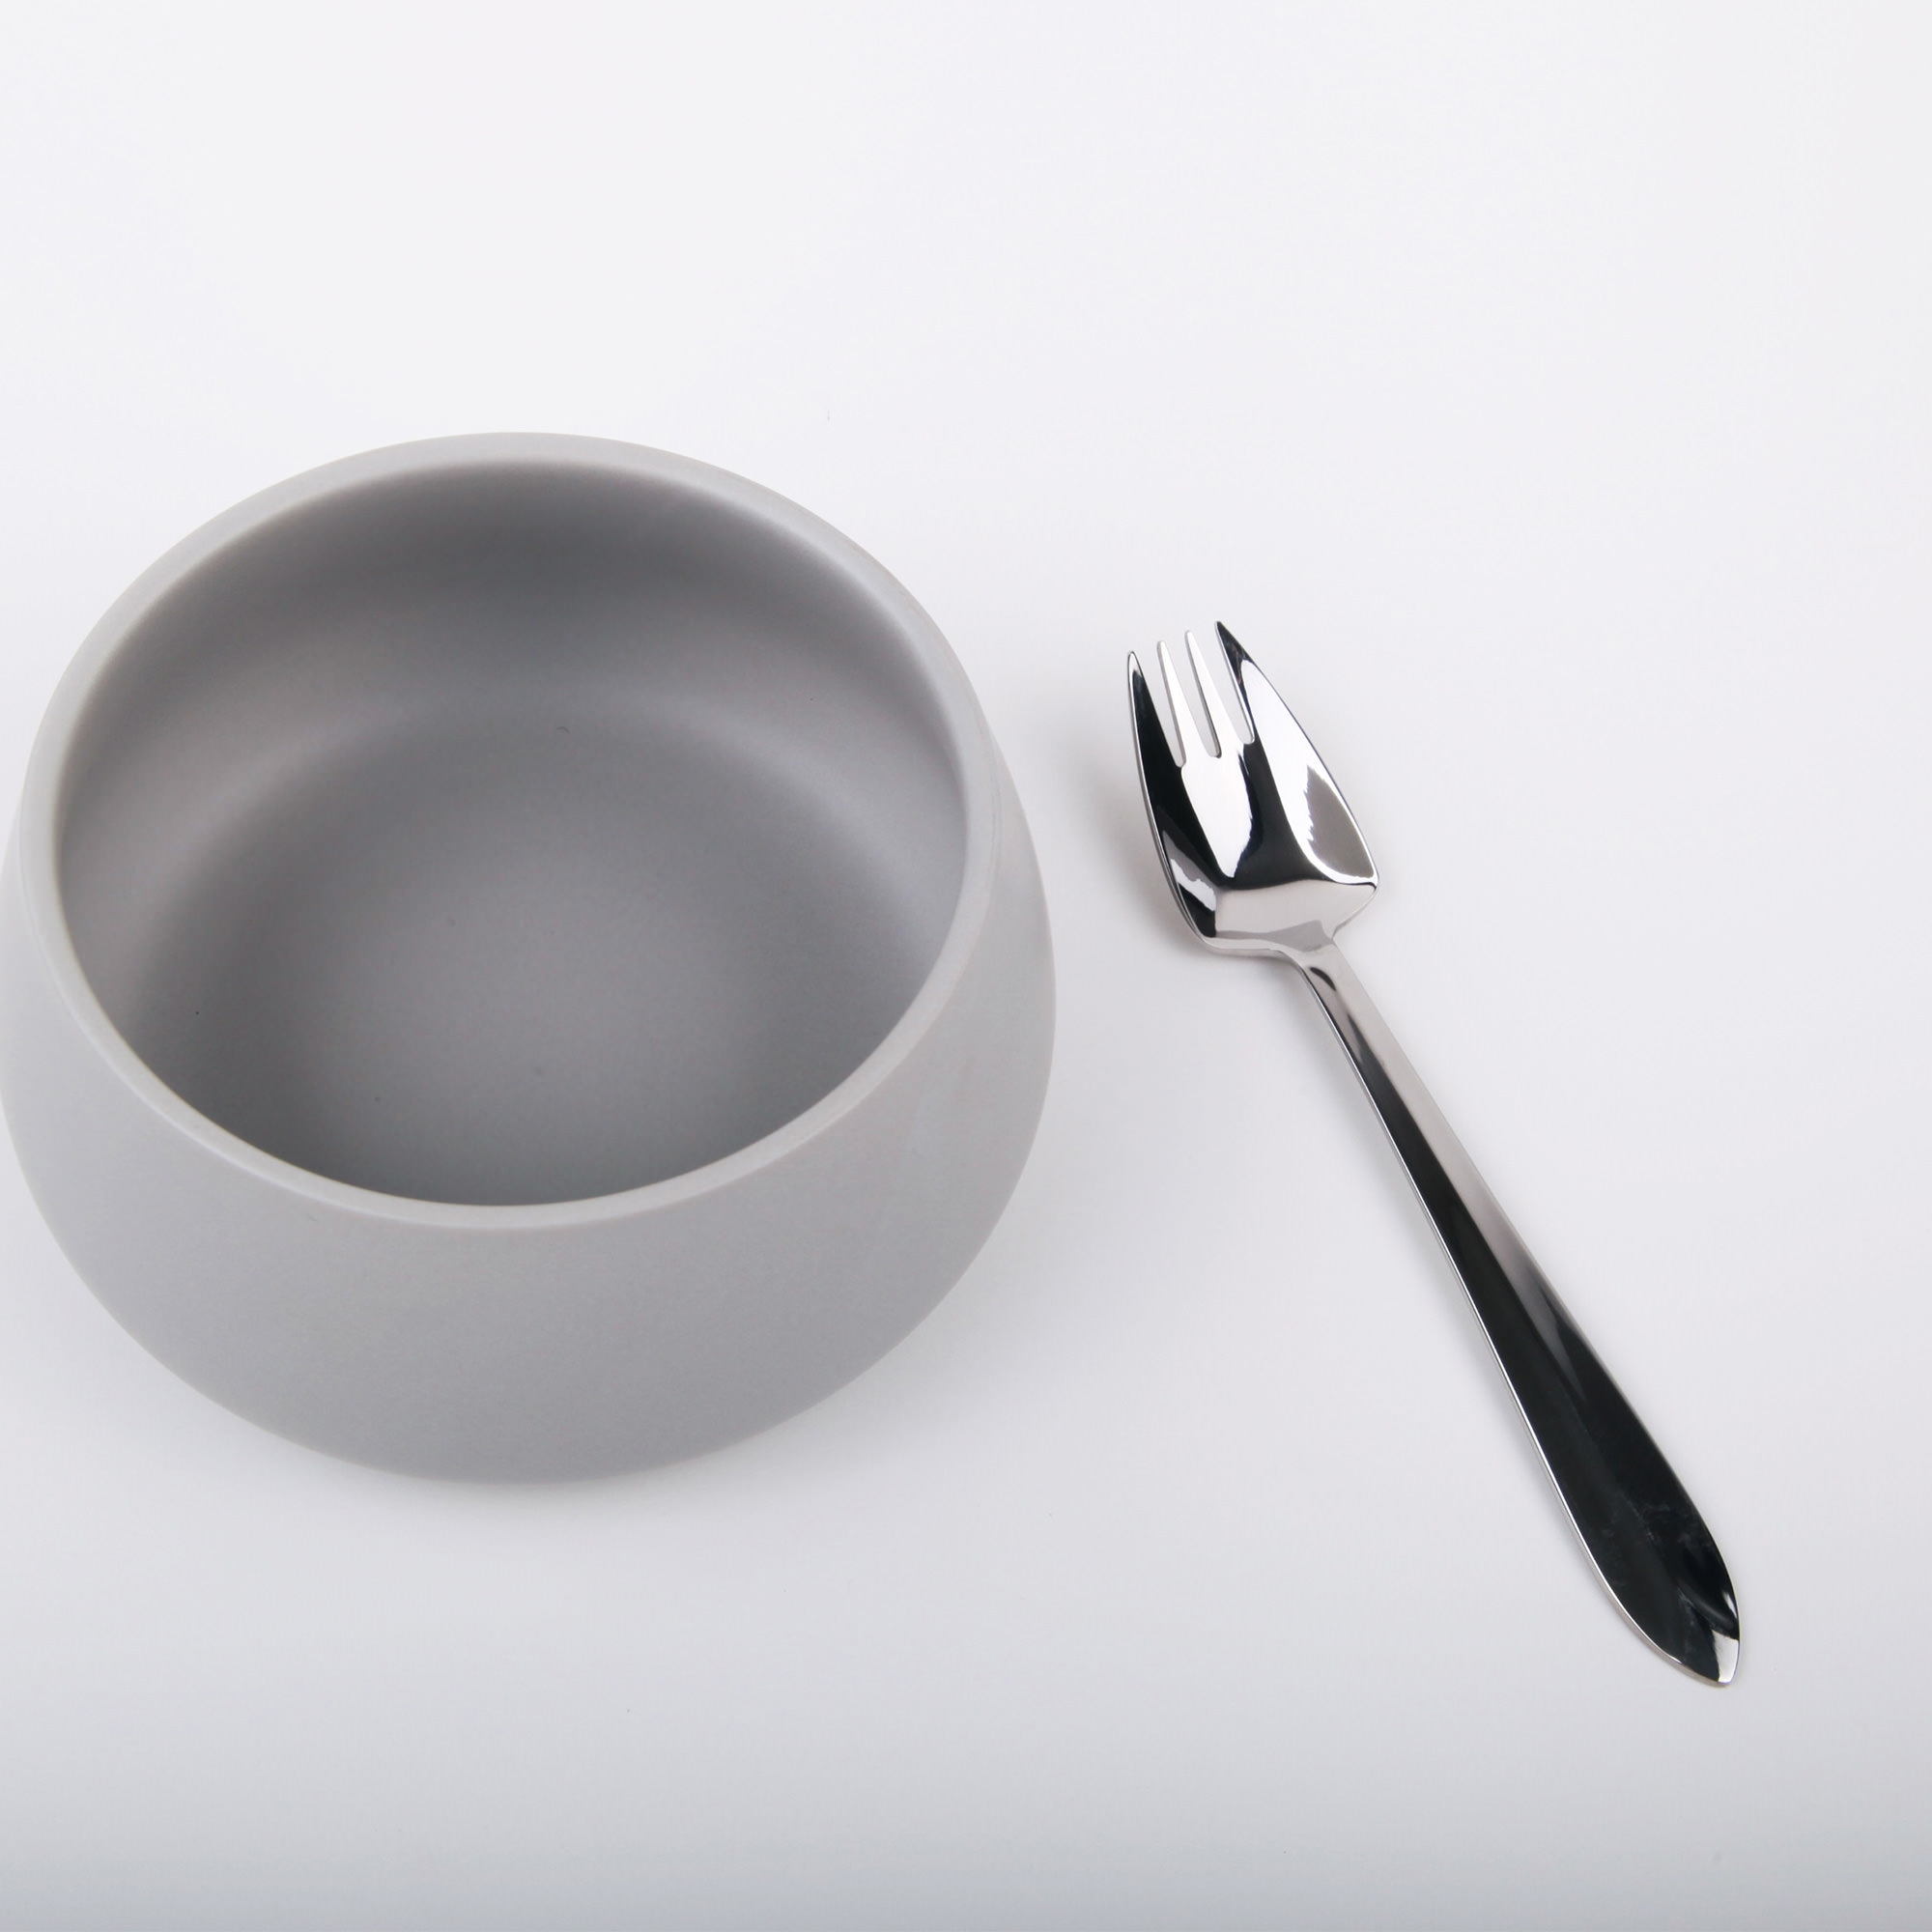 Splayd Cutlery Set of 2 Mirror Finish Image 2